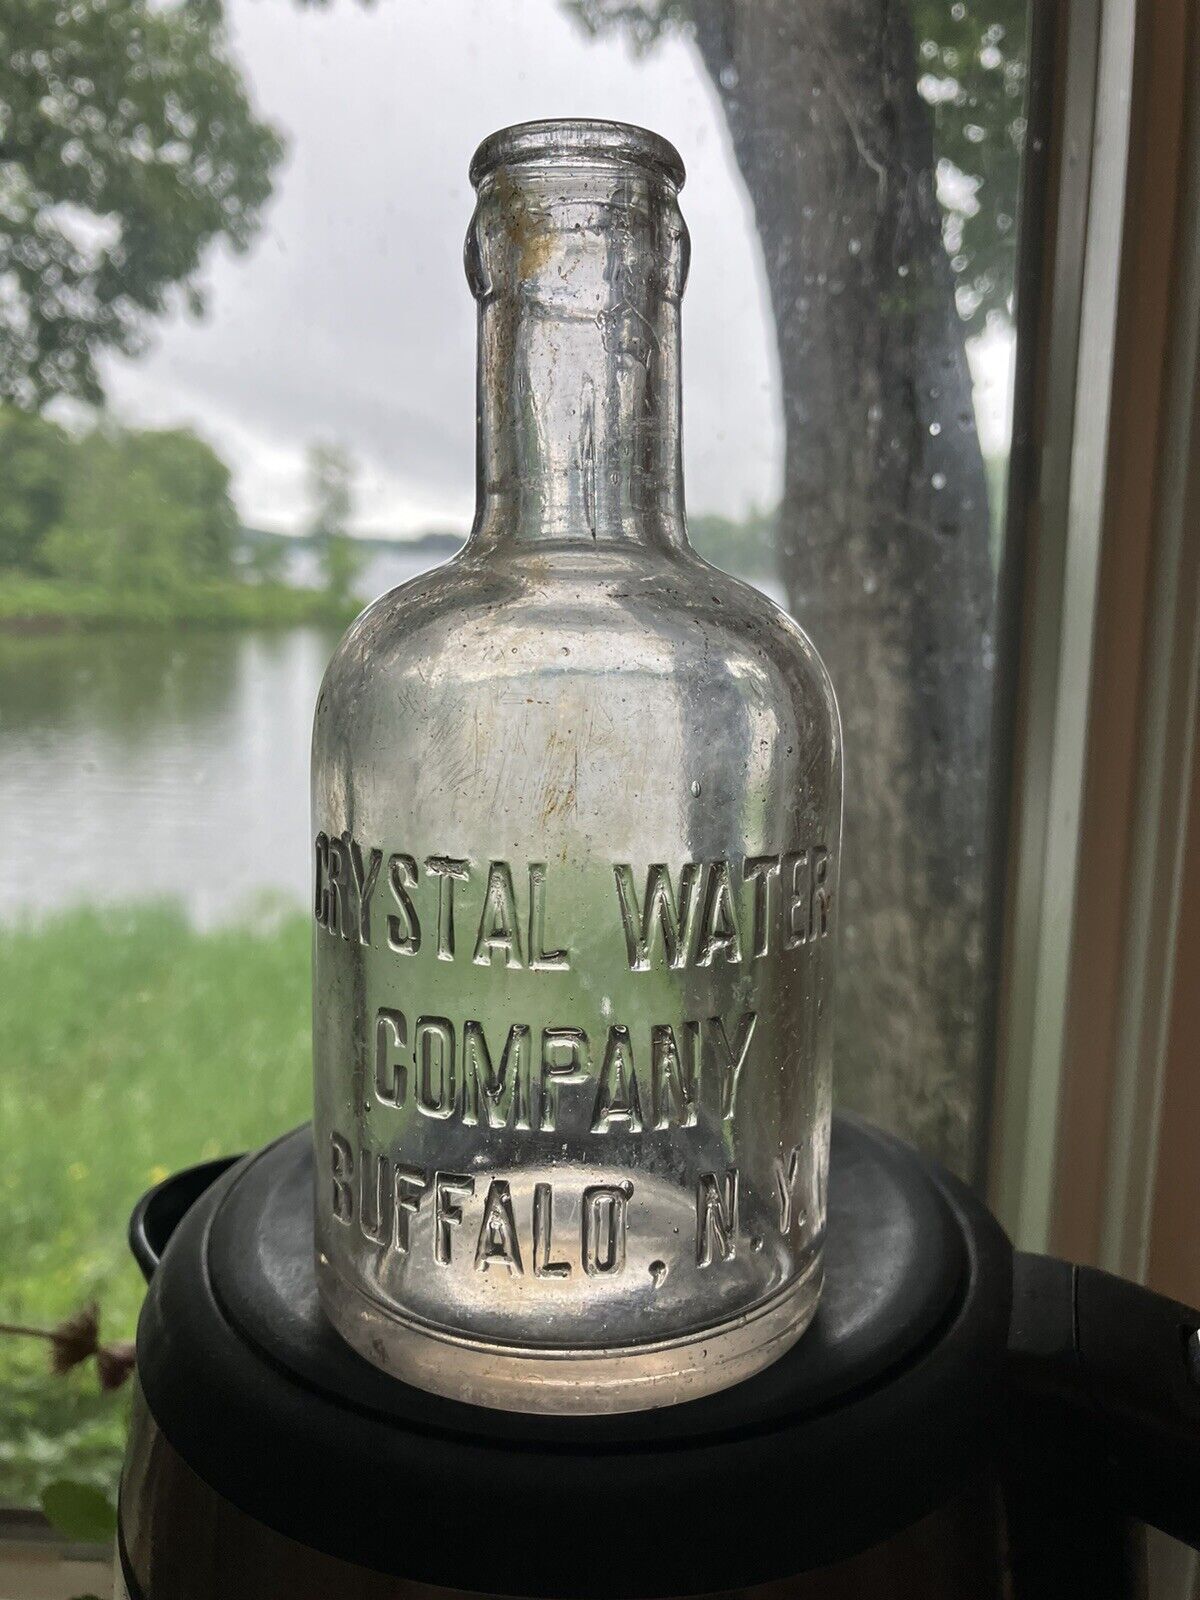 Crystal Water Company - Buffalo, N.Y. - New York - Vintage Soda Type Bottle